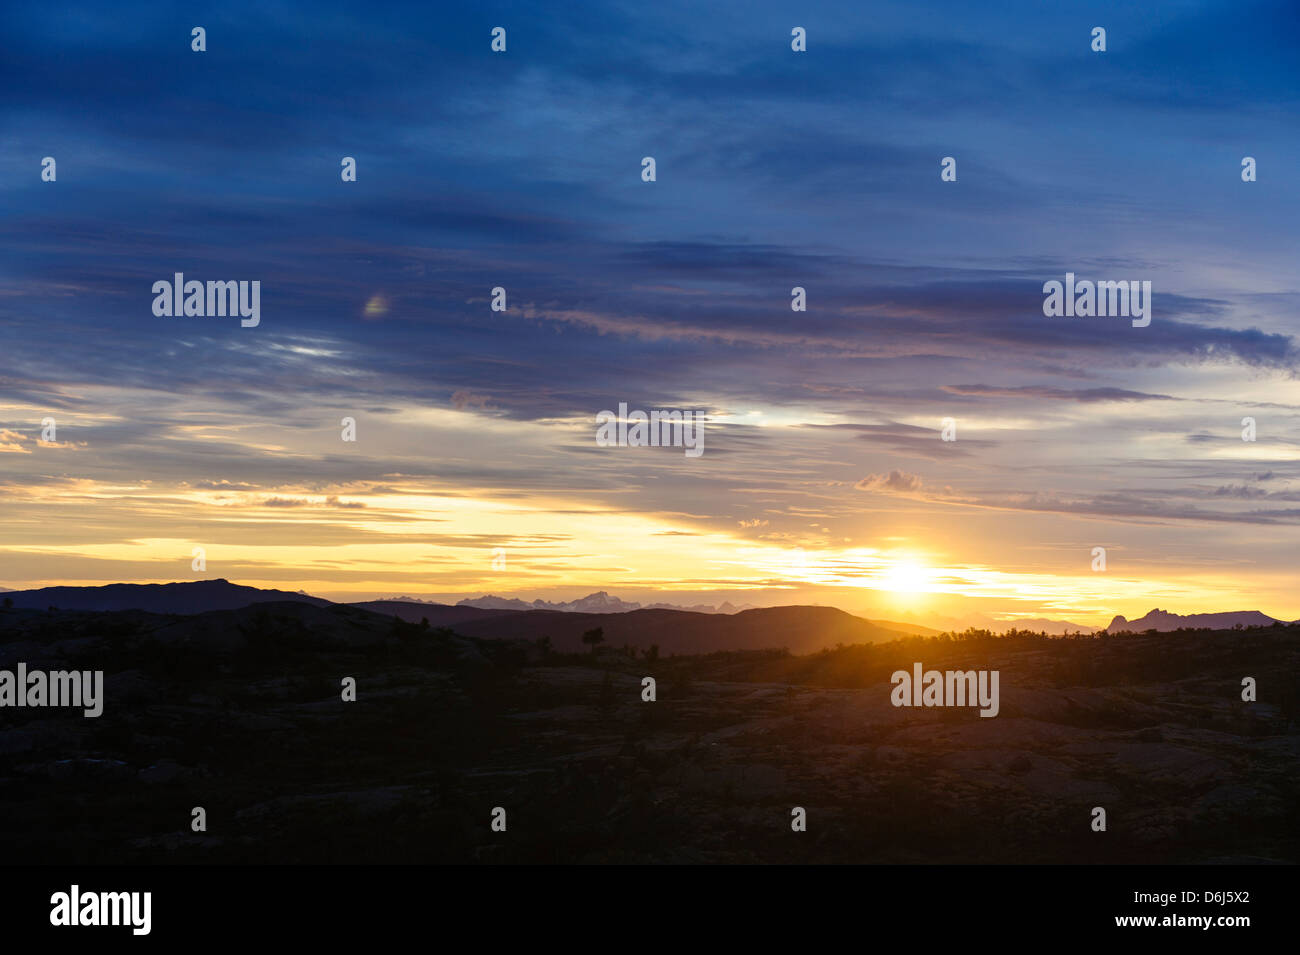 Midnight sun marathon hi-res stock photography and images - Alamy